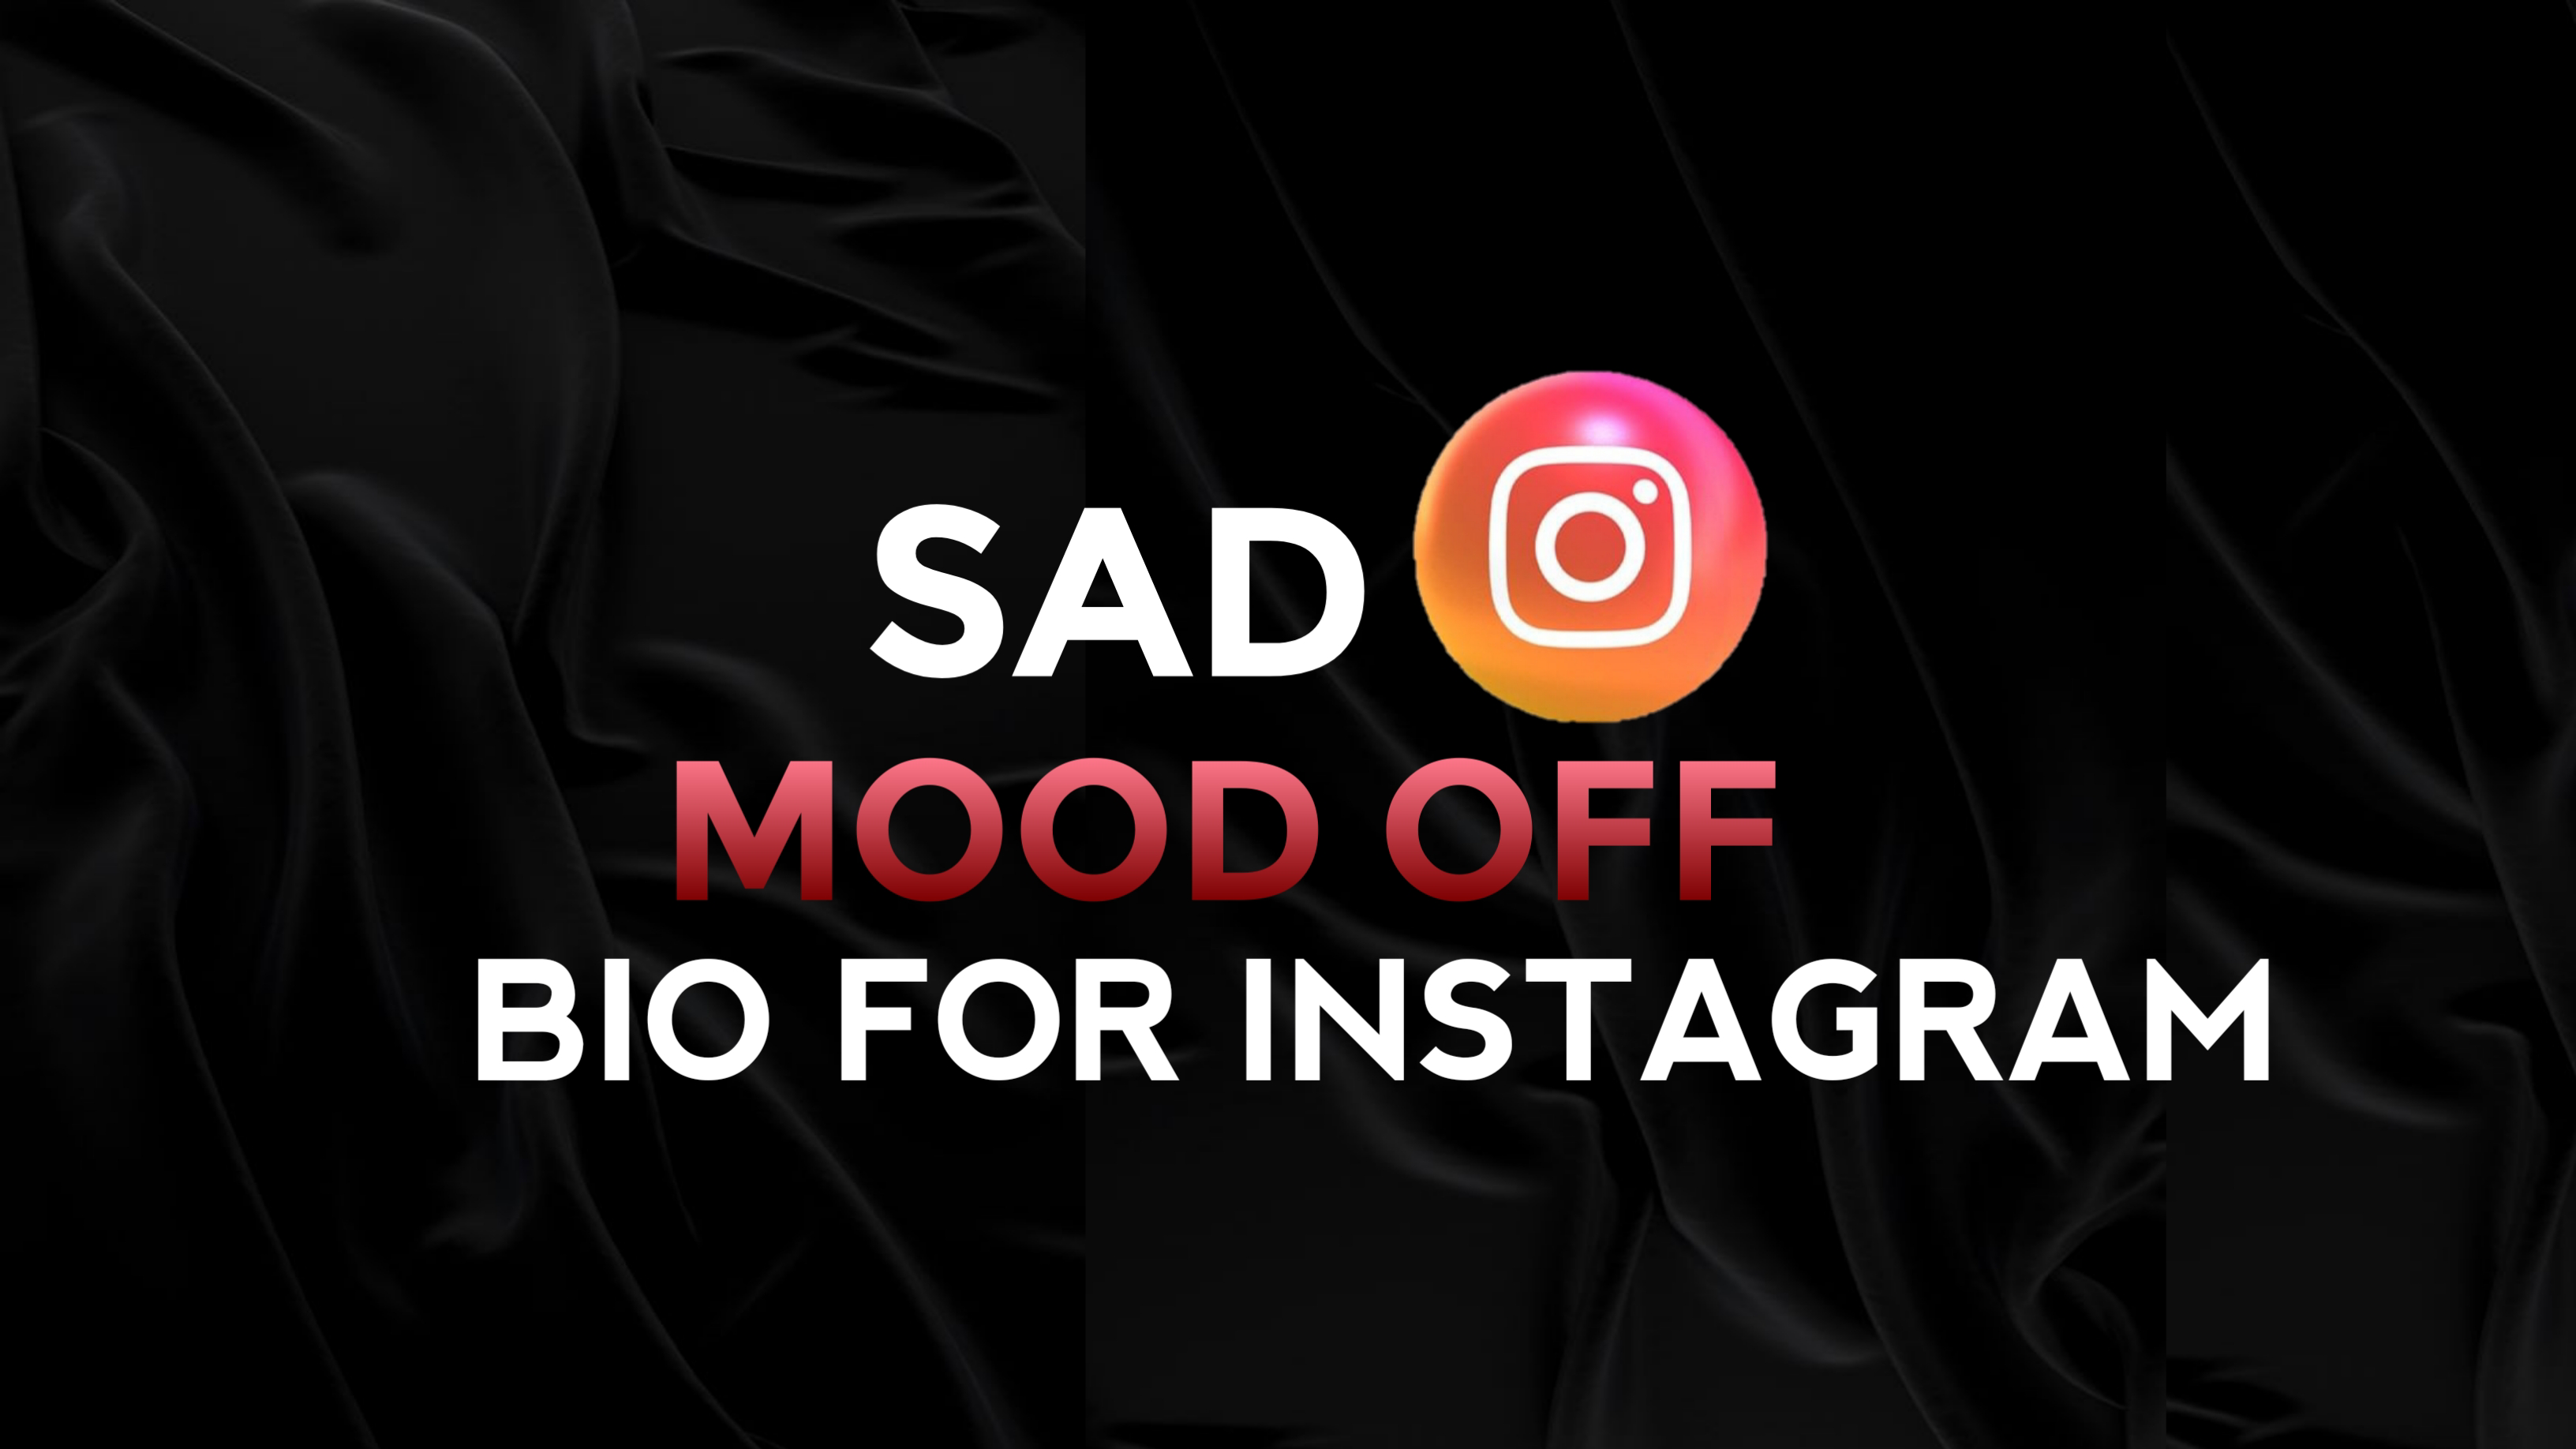 Instagram Bio Mood Off For Girl&Mood Off Bio For Boy Instagram